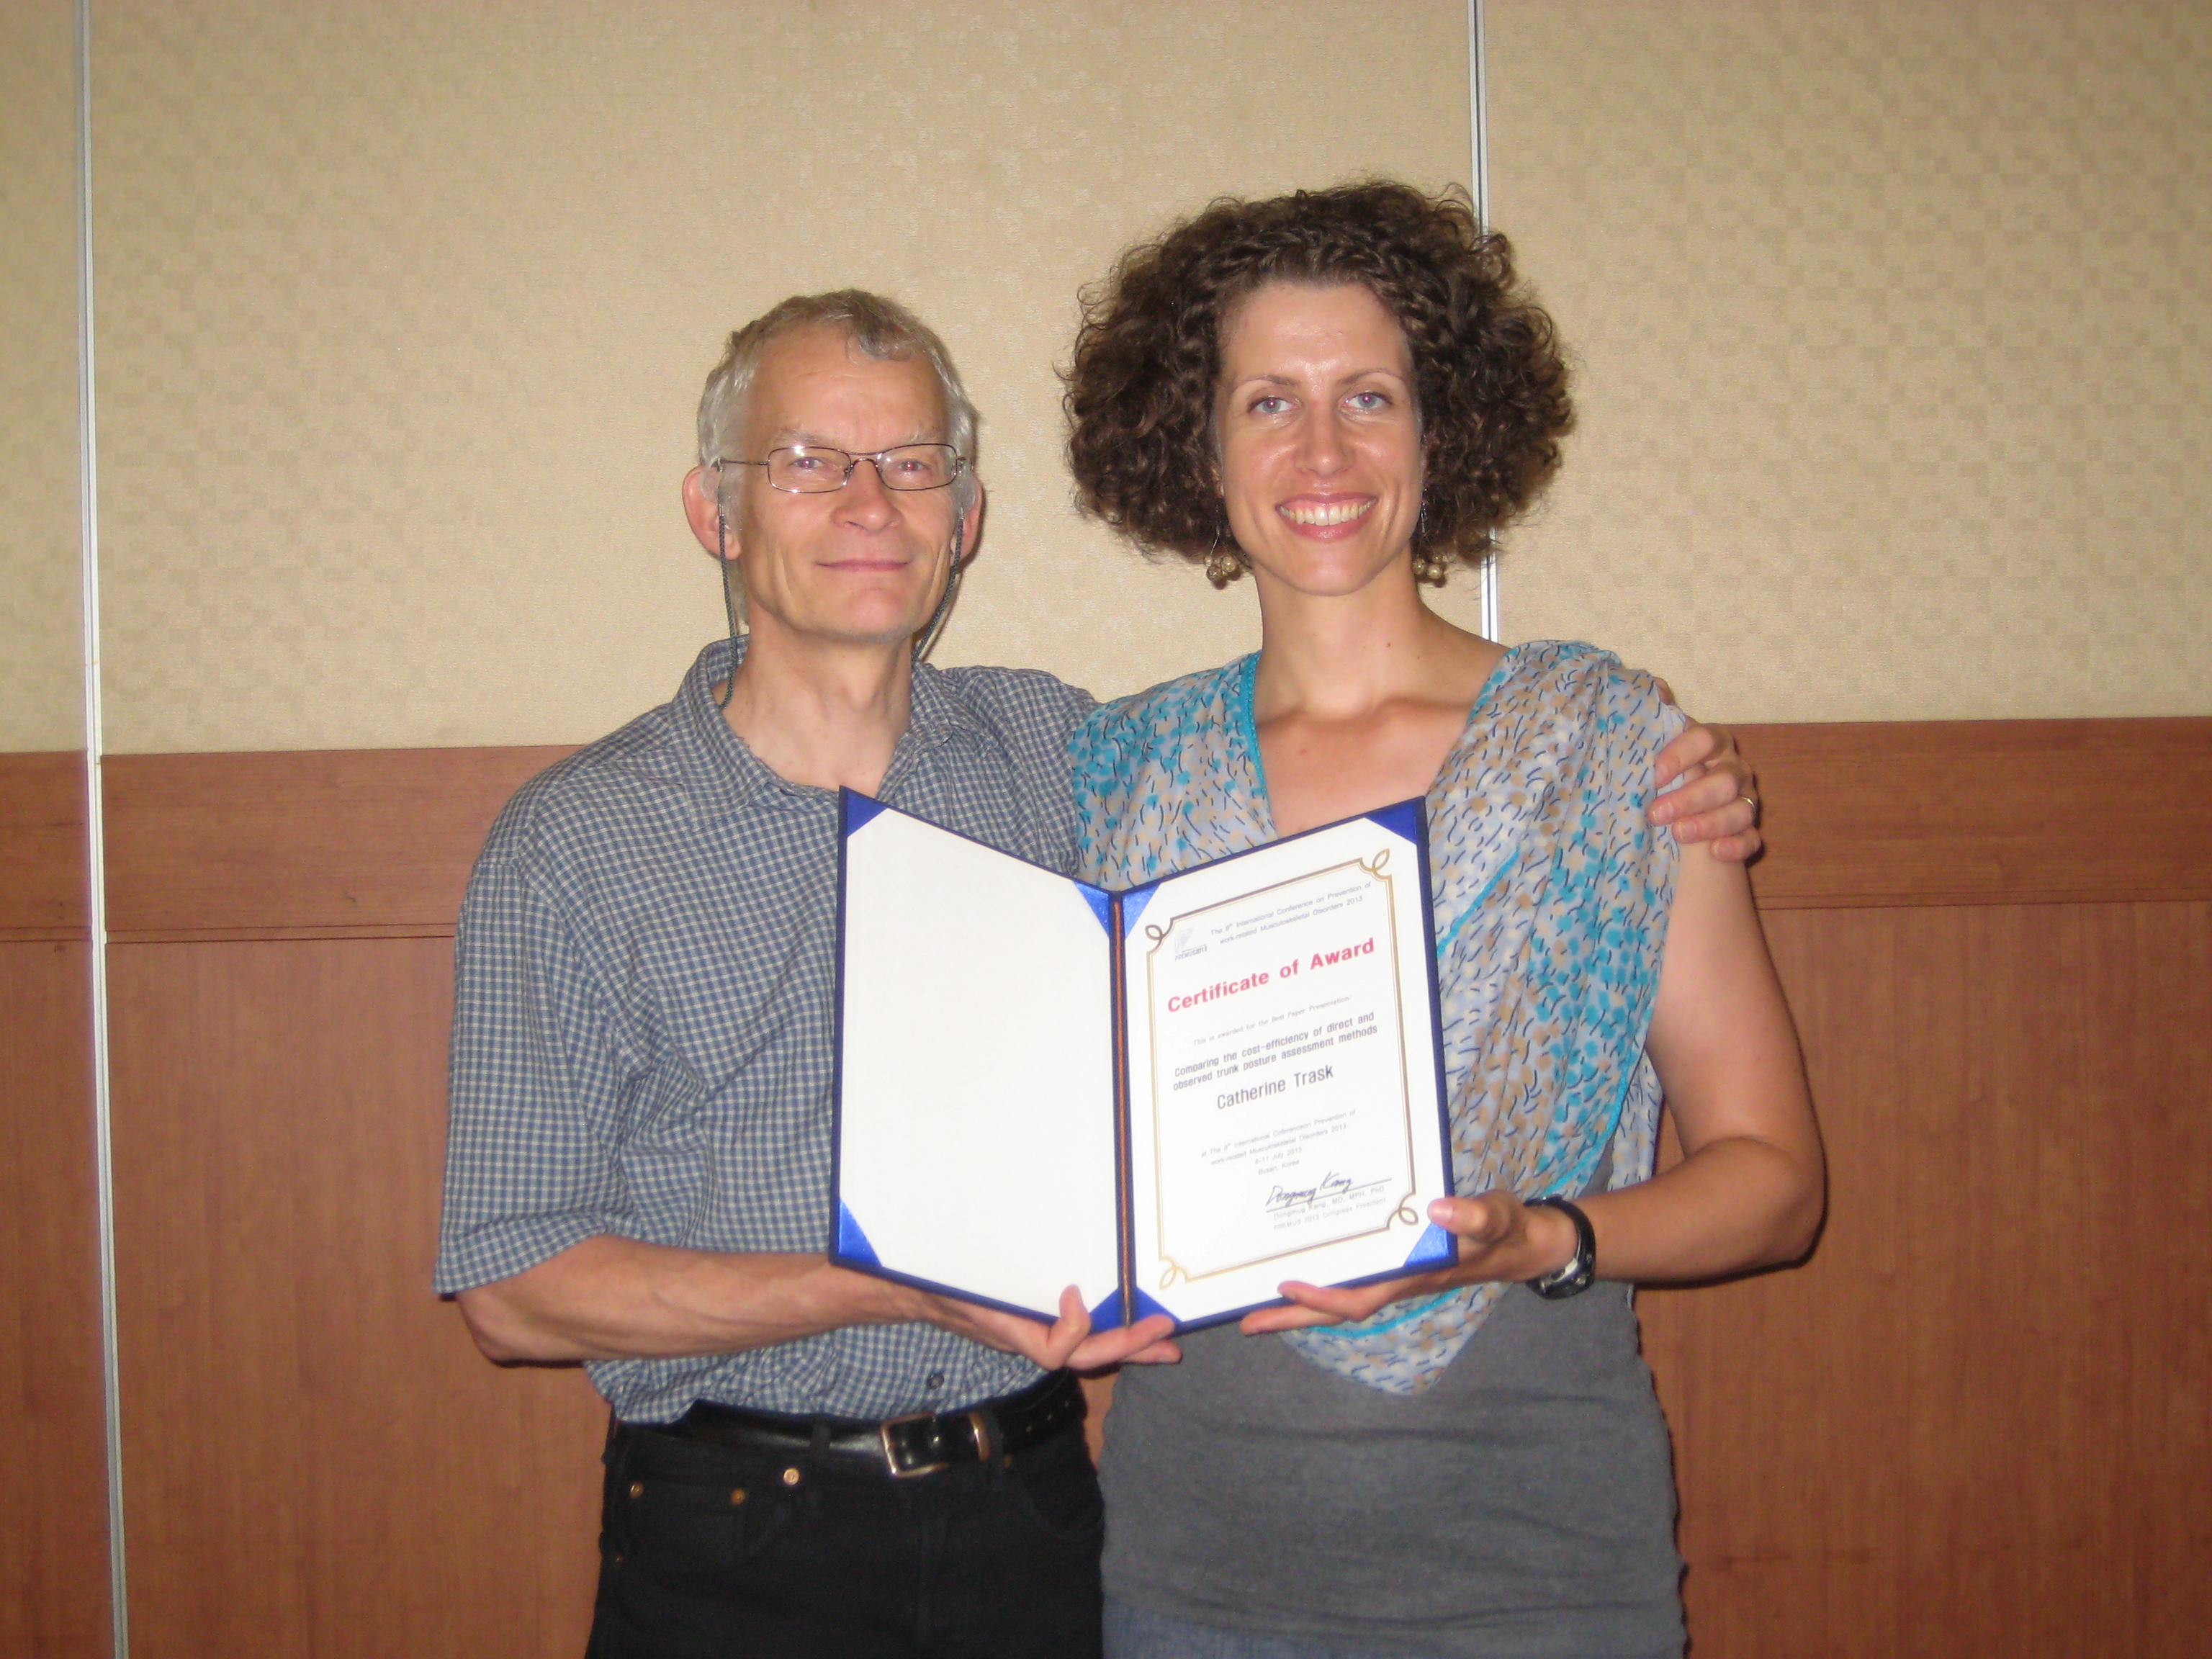 Svend Erik and I posing with the award